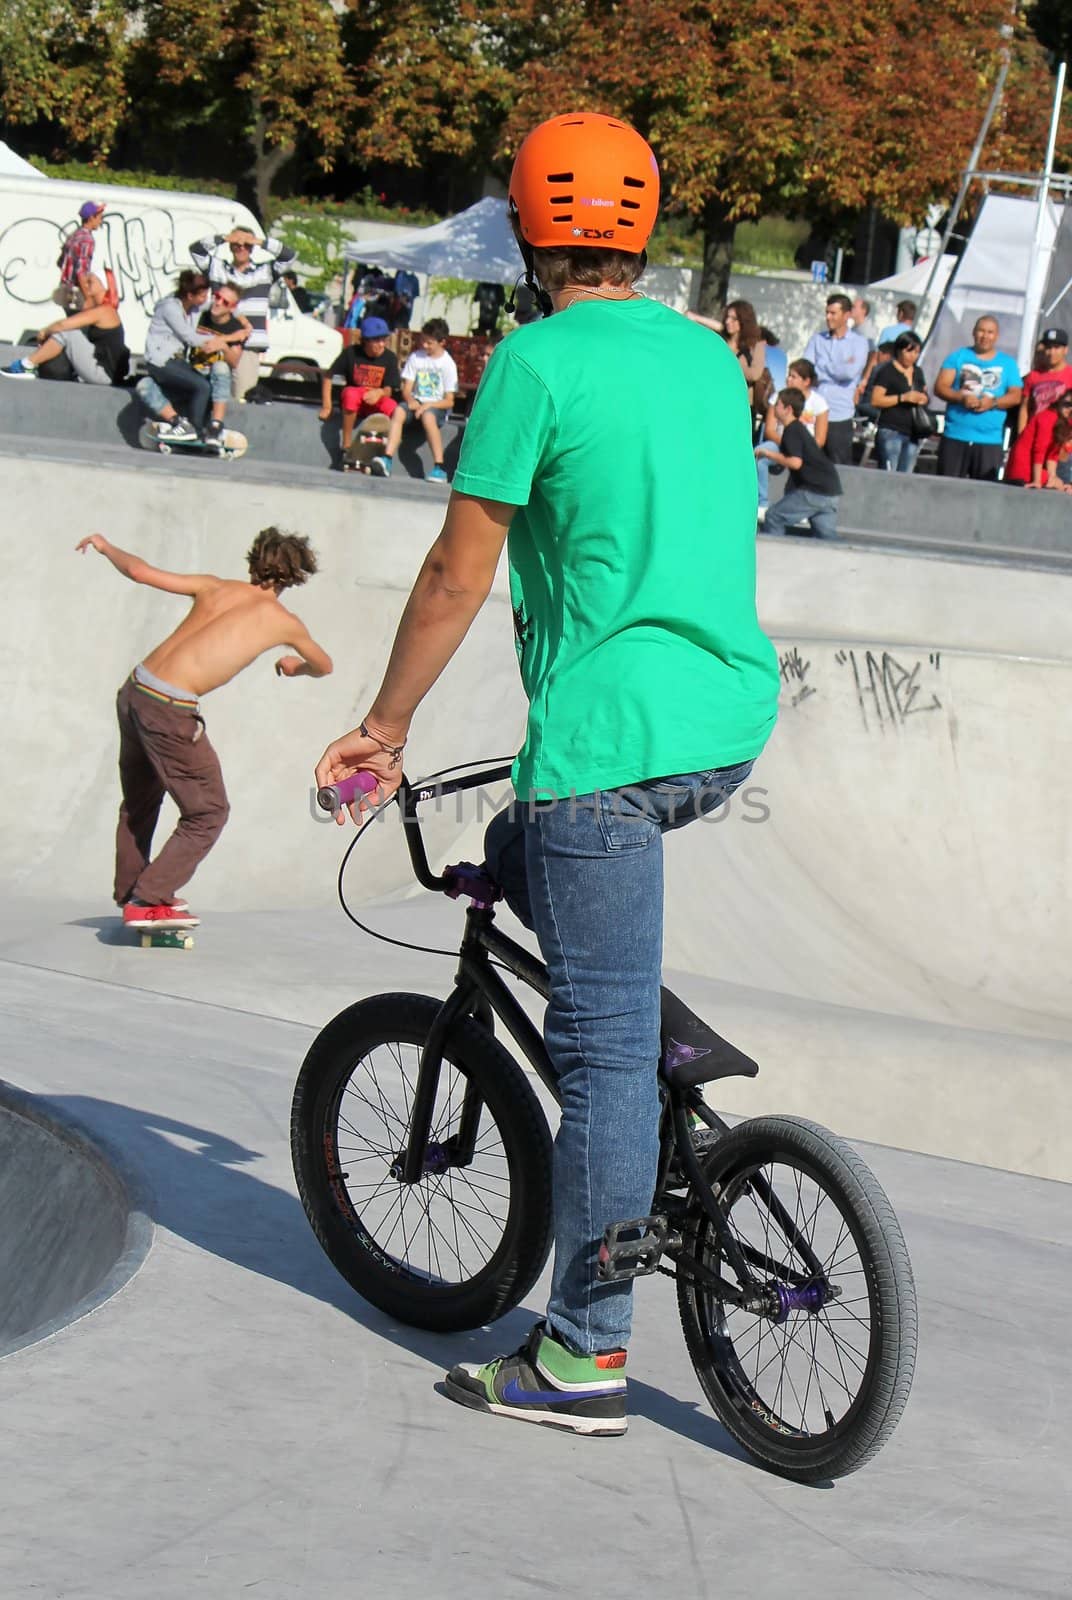 BMX biker and skater in the skate park by Elenaphotos21